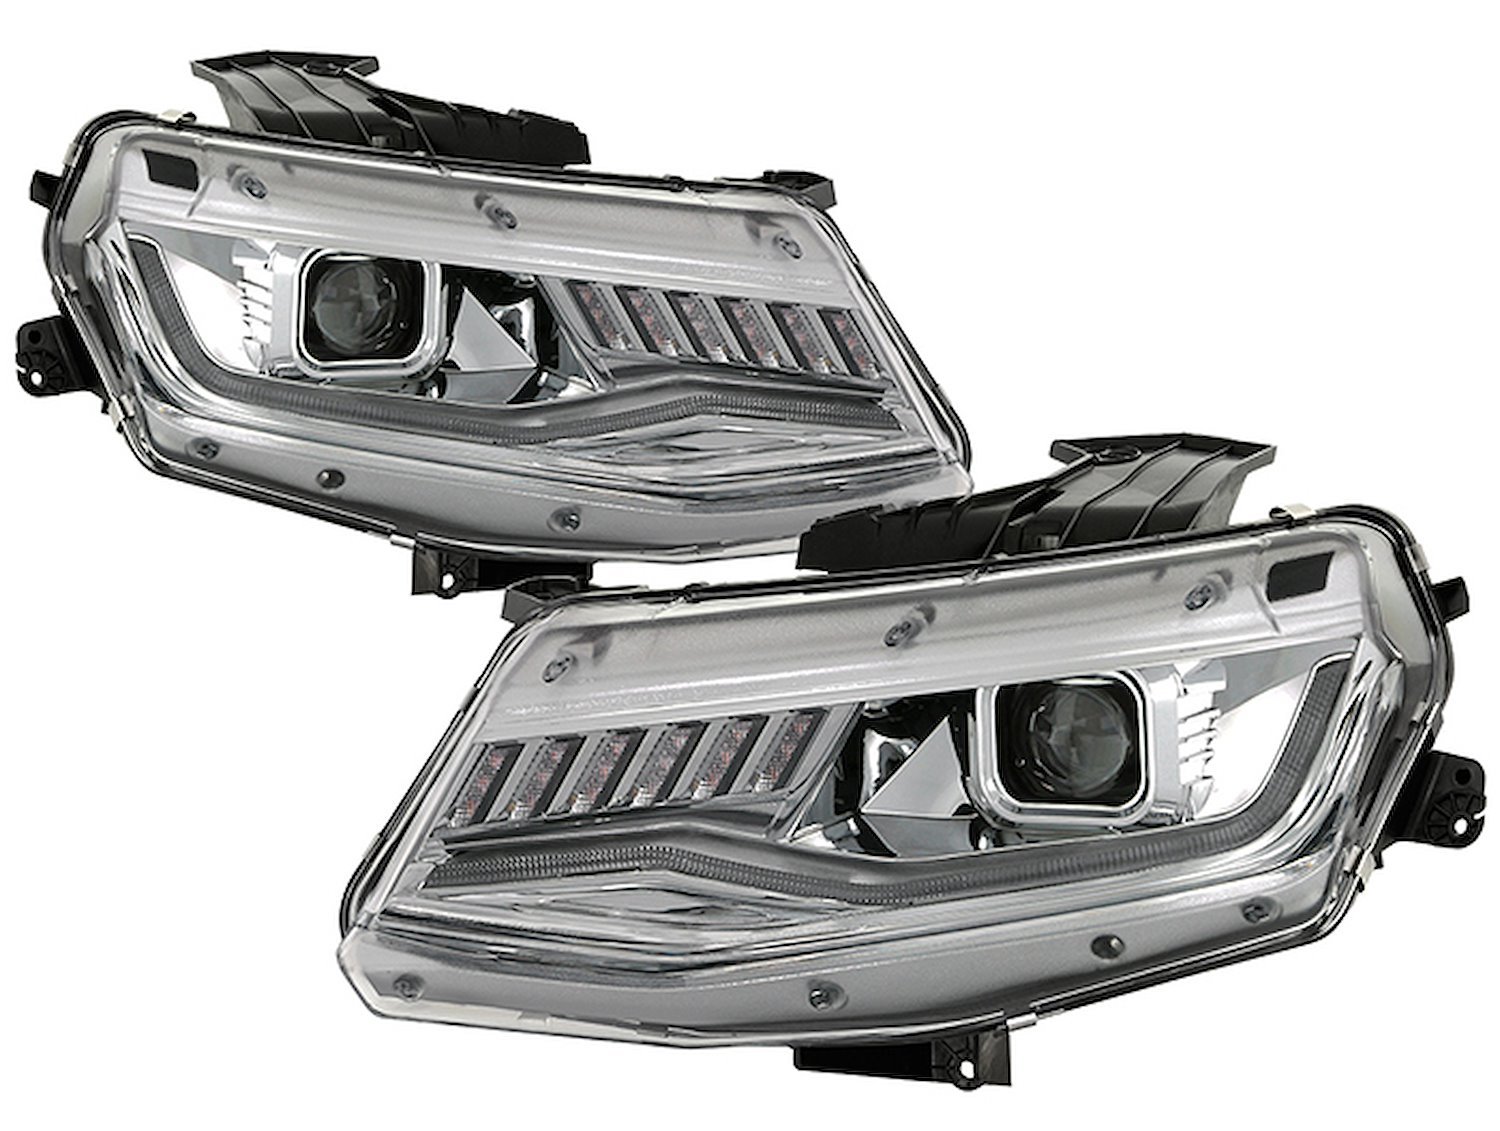 Signature Series HID Projector Headlights 2016-2018 Chevy Camaro, Chrome